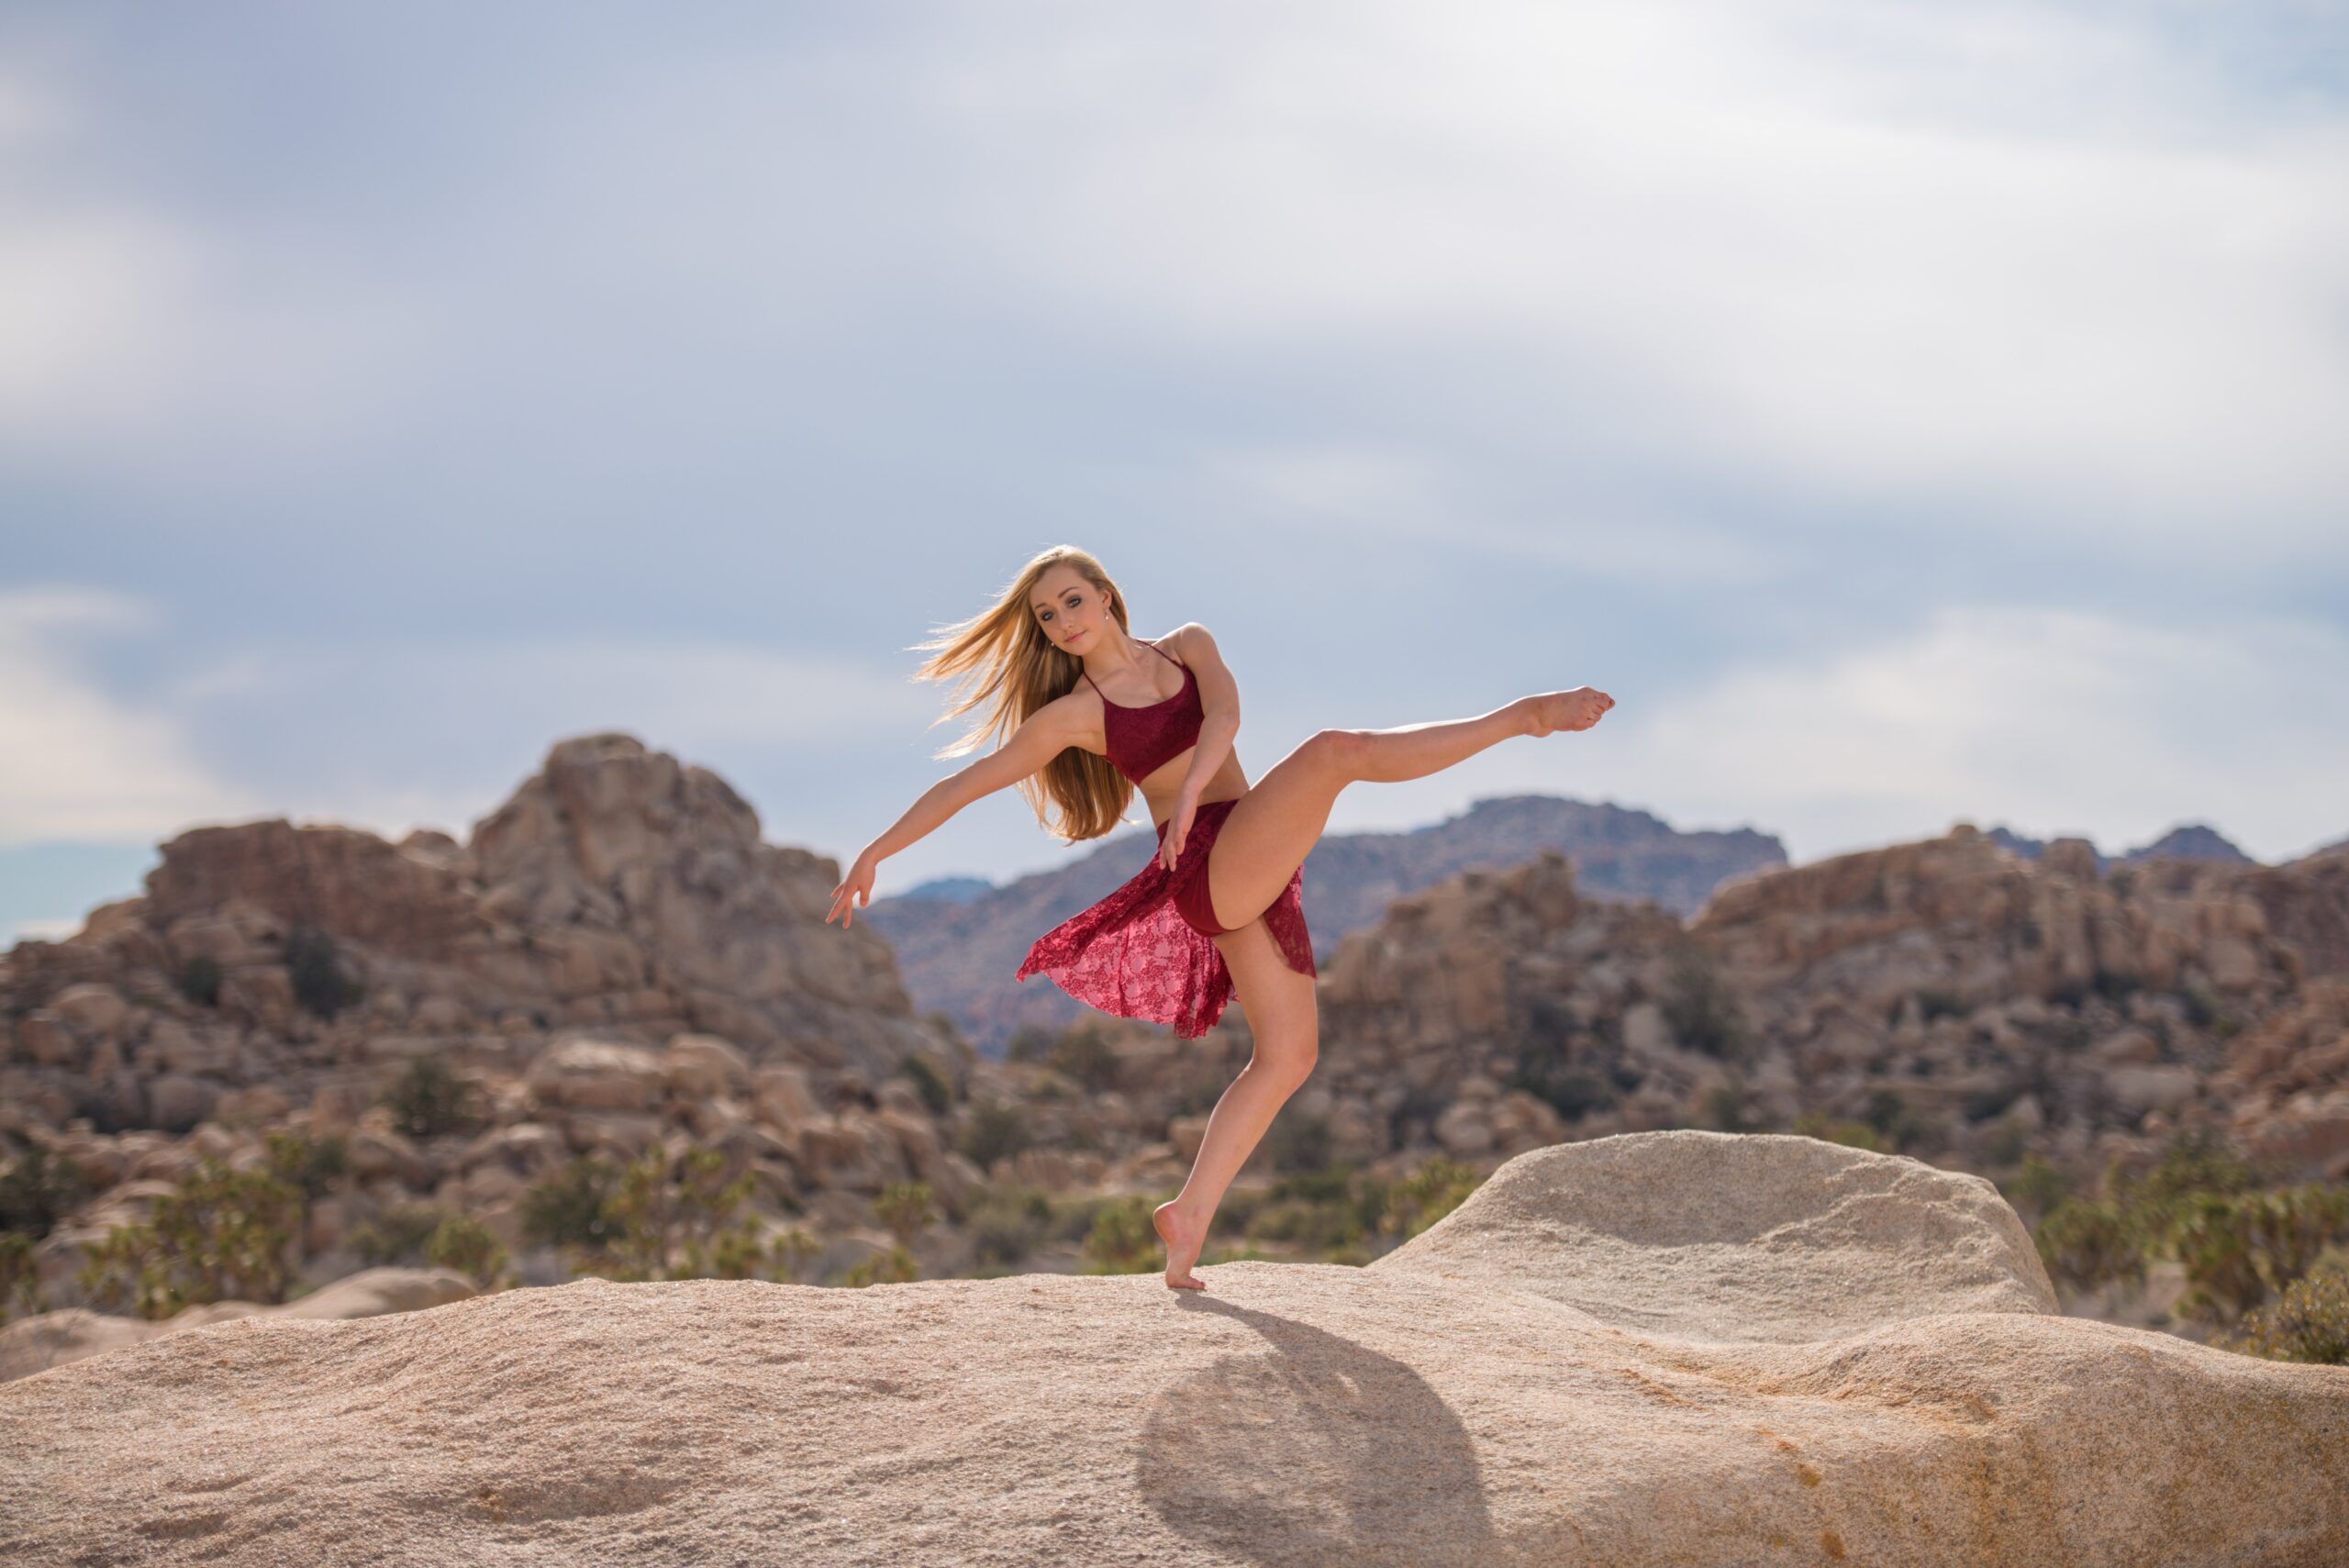 lyrical dancer wearing a red dance costume in a mountain desert